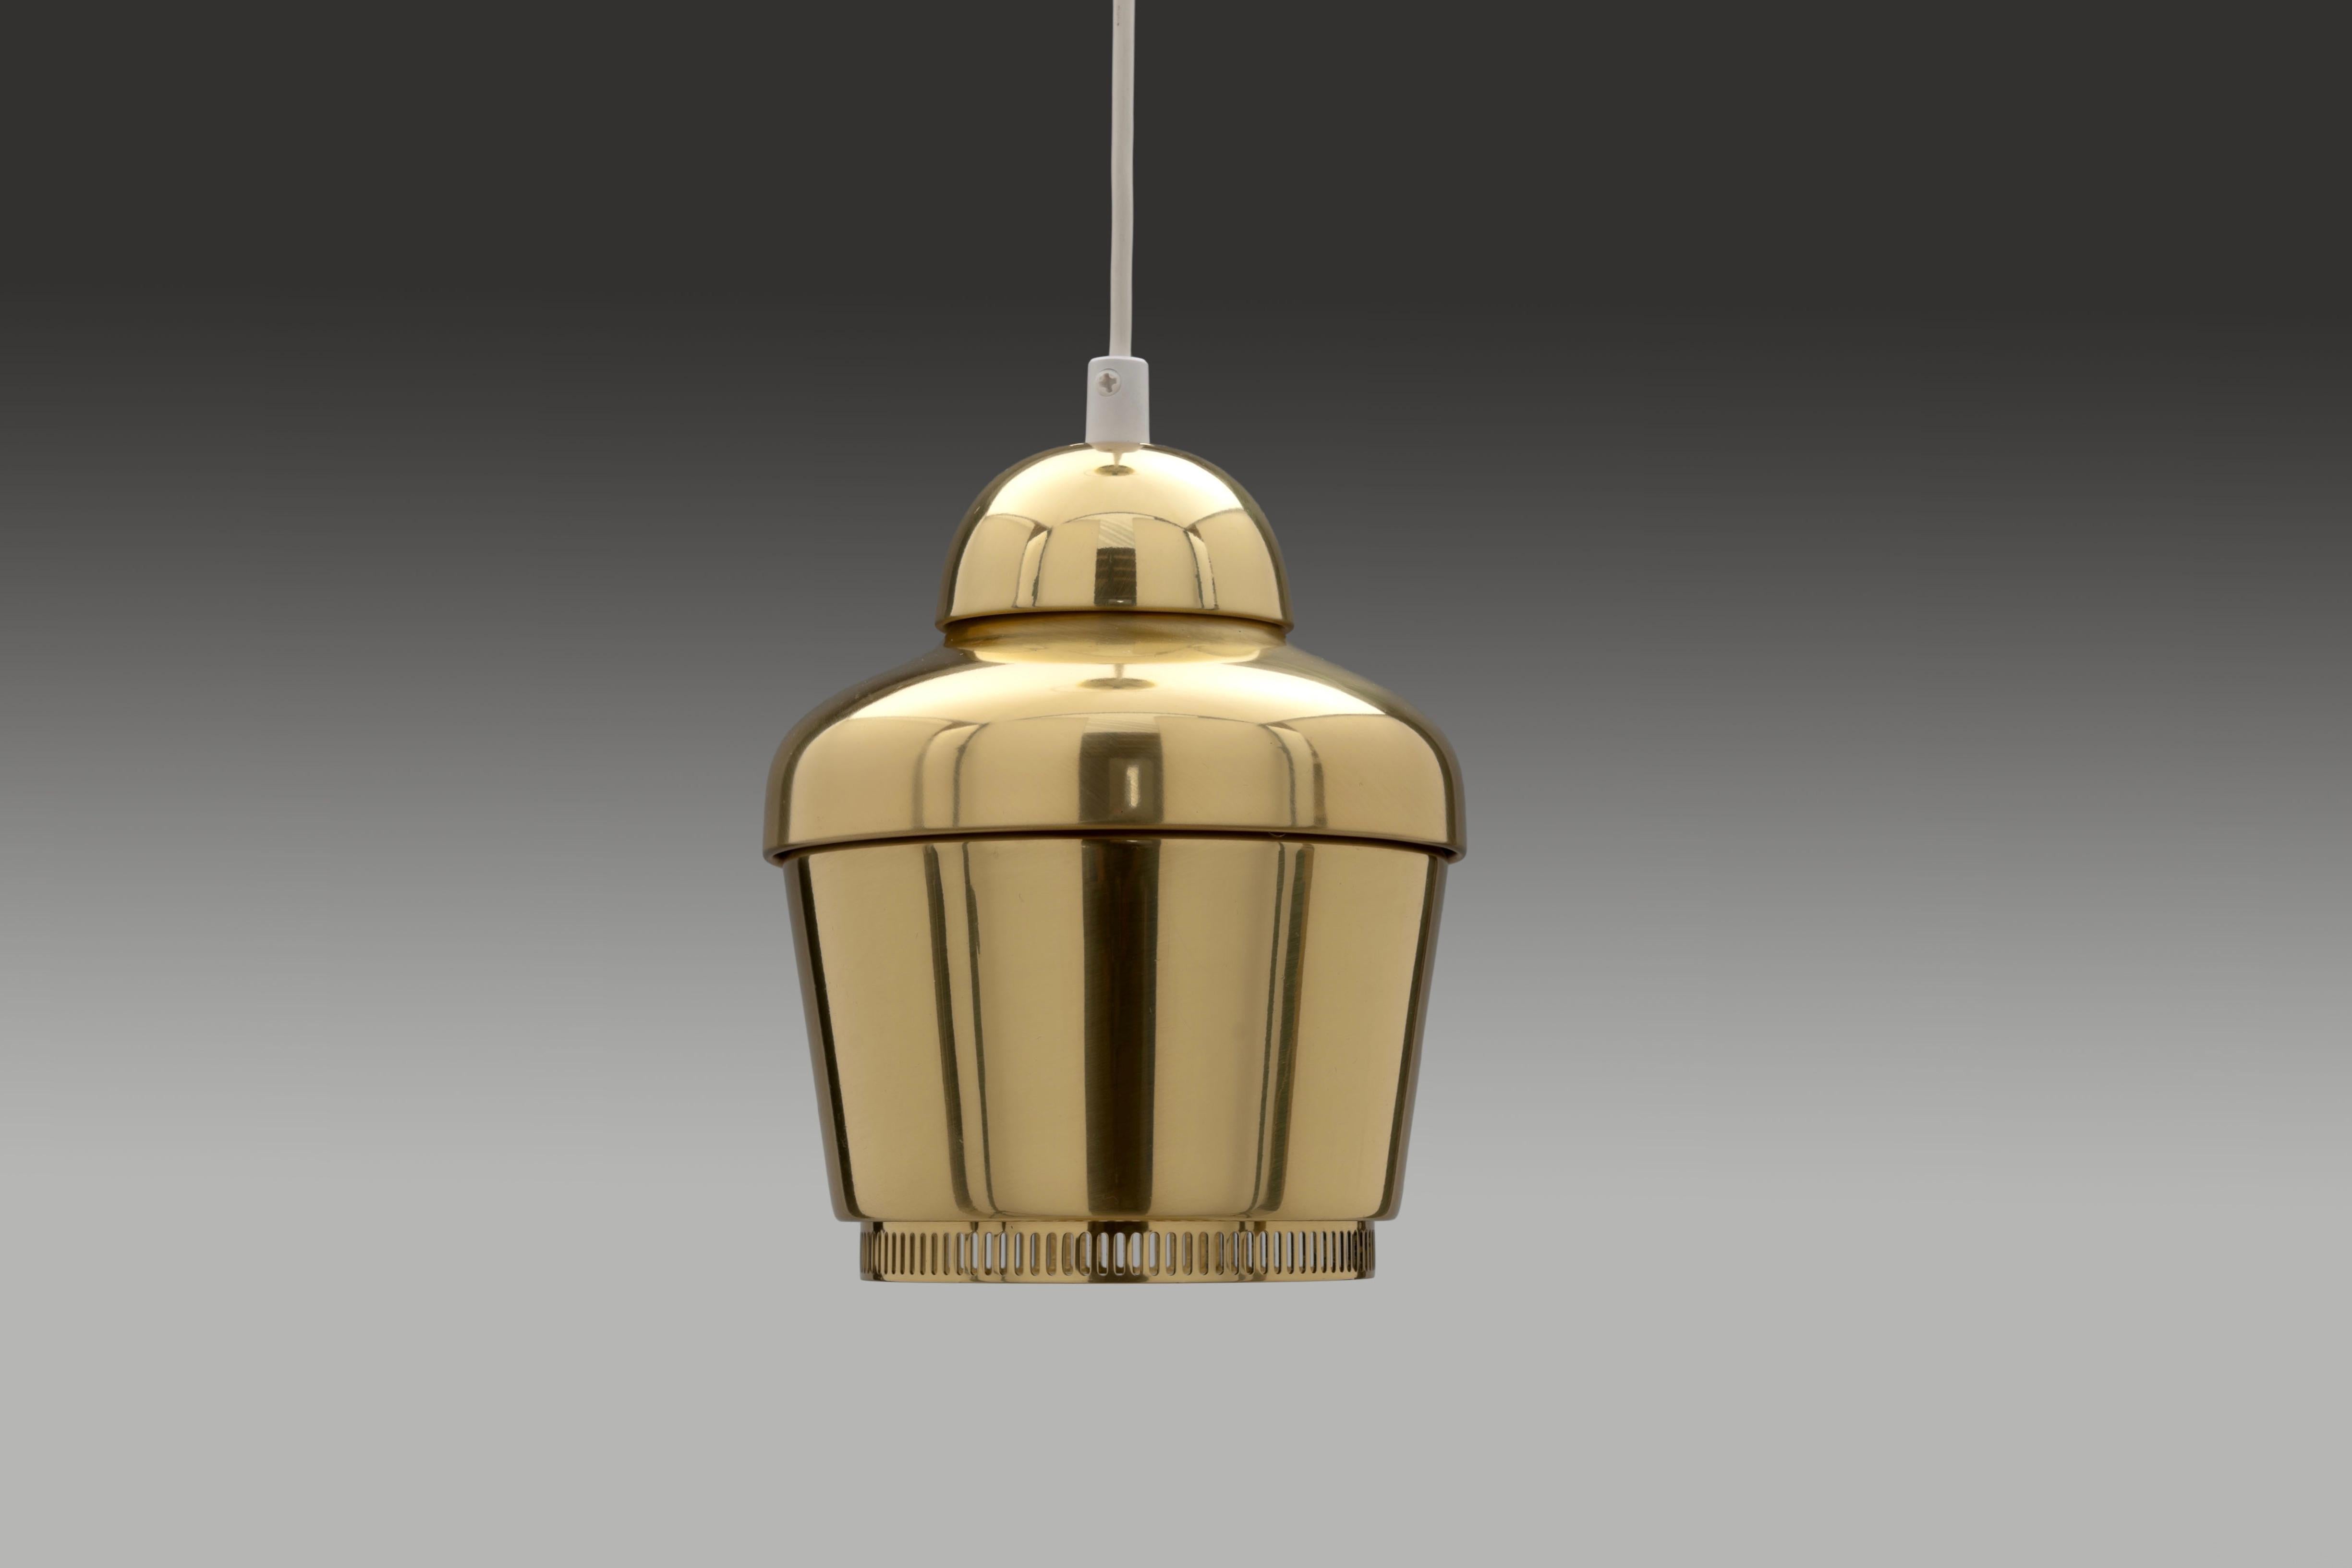 Brass 'Kultakello' Model A 330 'Golden Bell' Pendant by Alvar Aalto, Finland 1